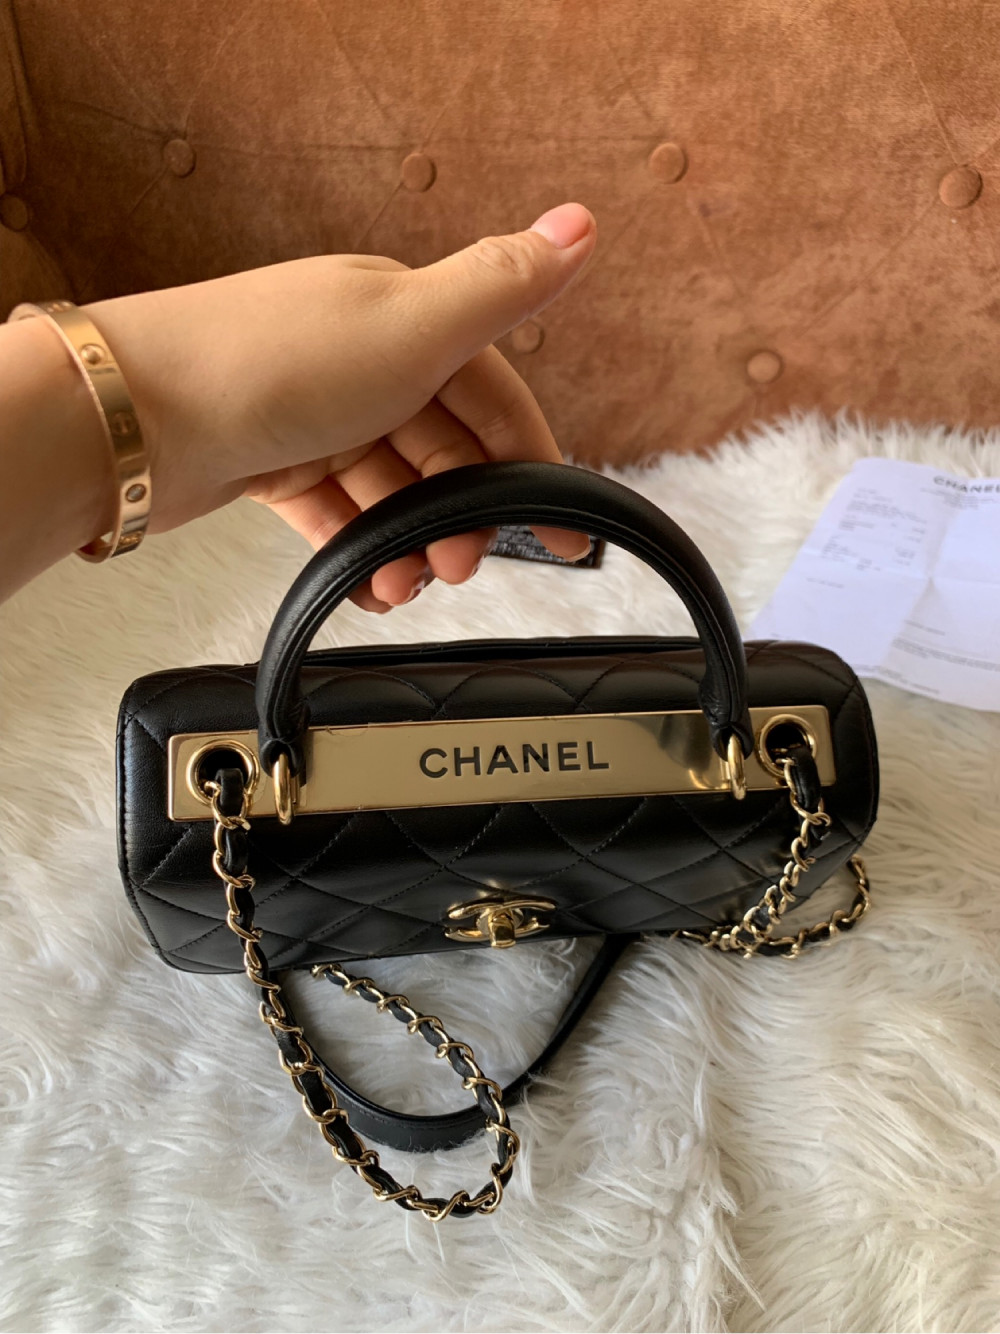 Chanel trendy